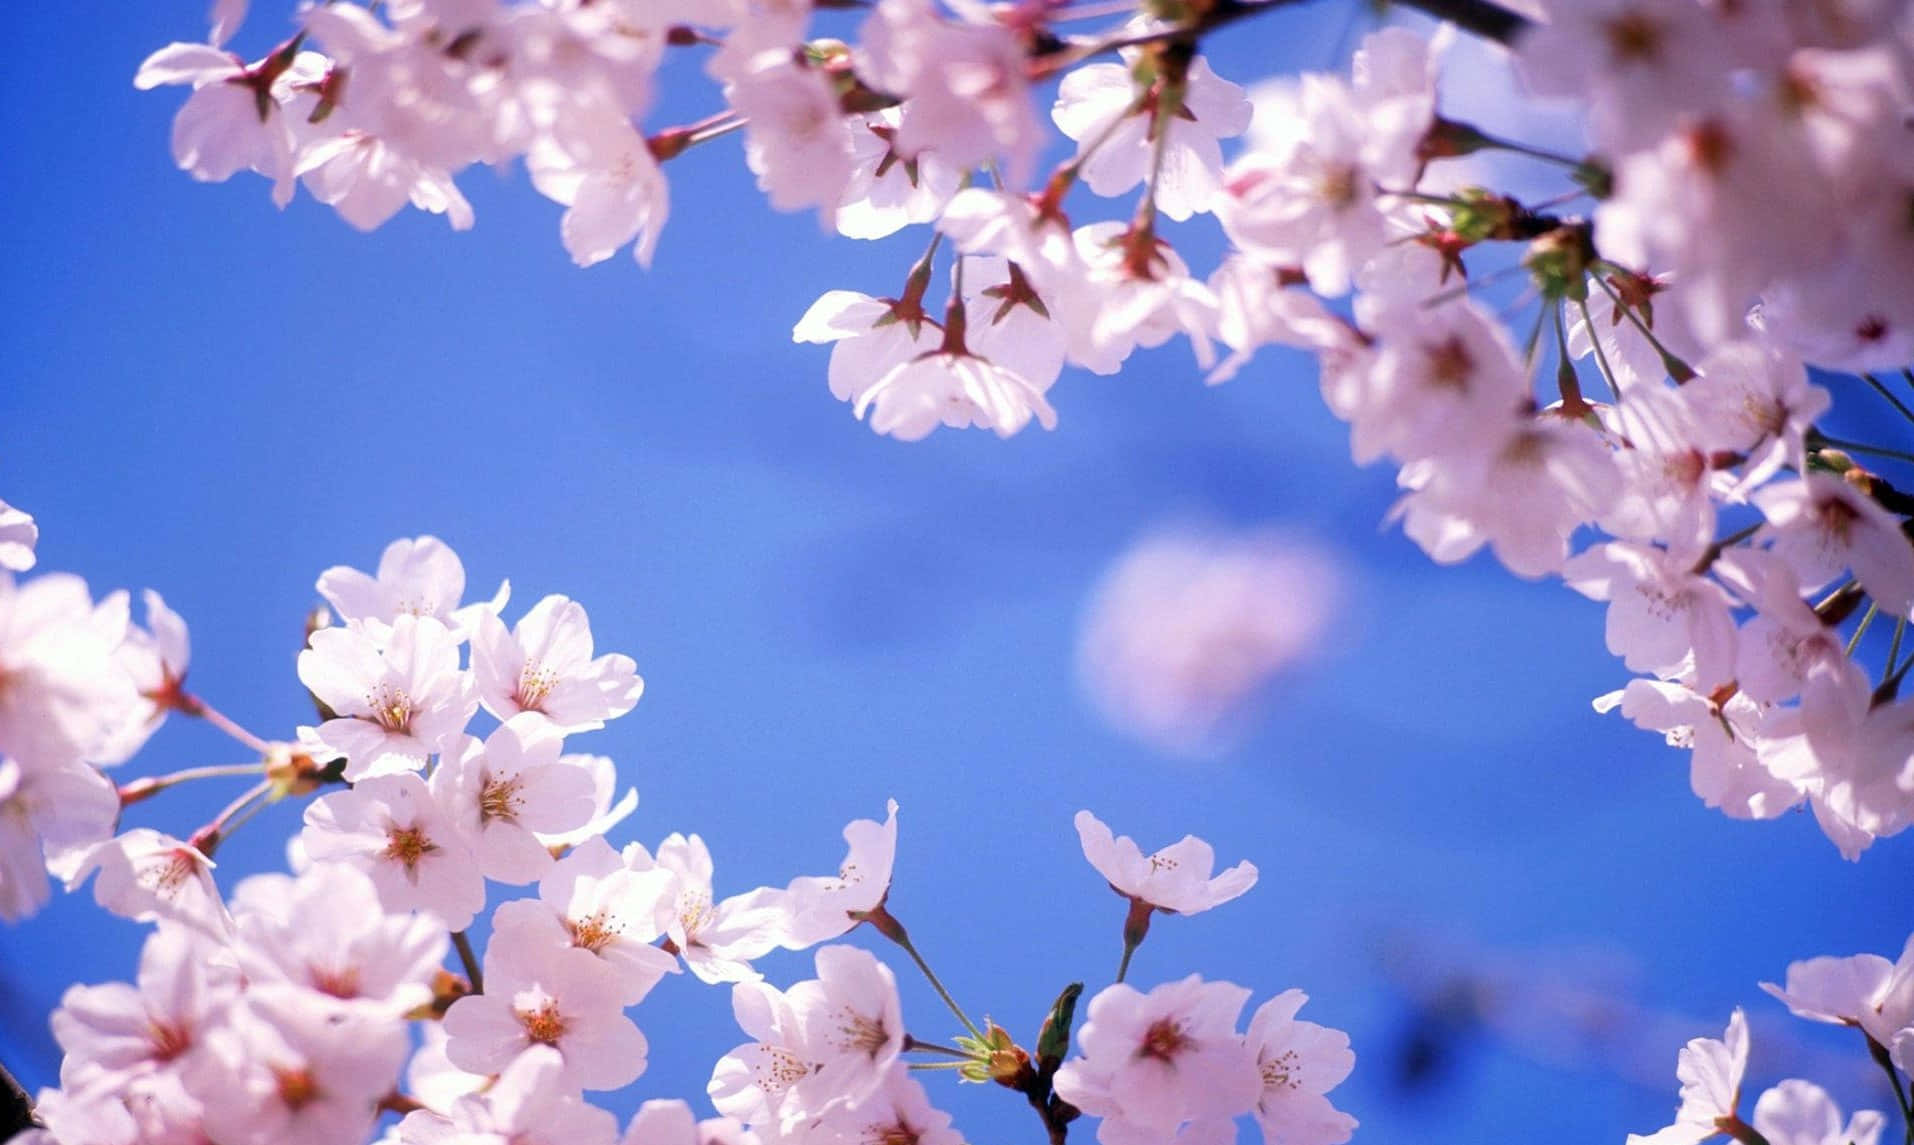 Unavista Pacífica De Un Árbol De Sakura En Flor. Fondo de pantalla